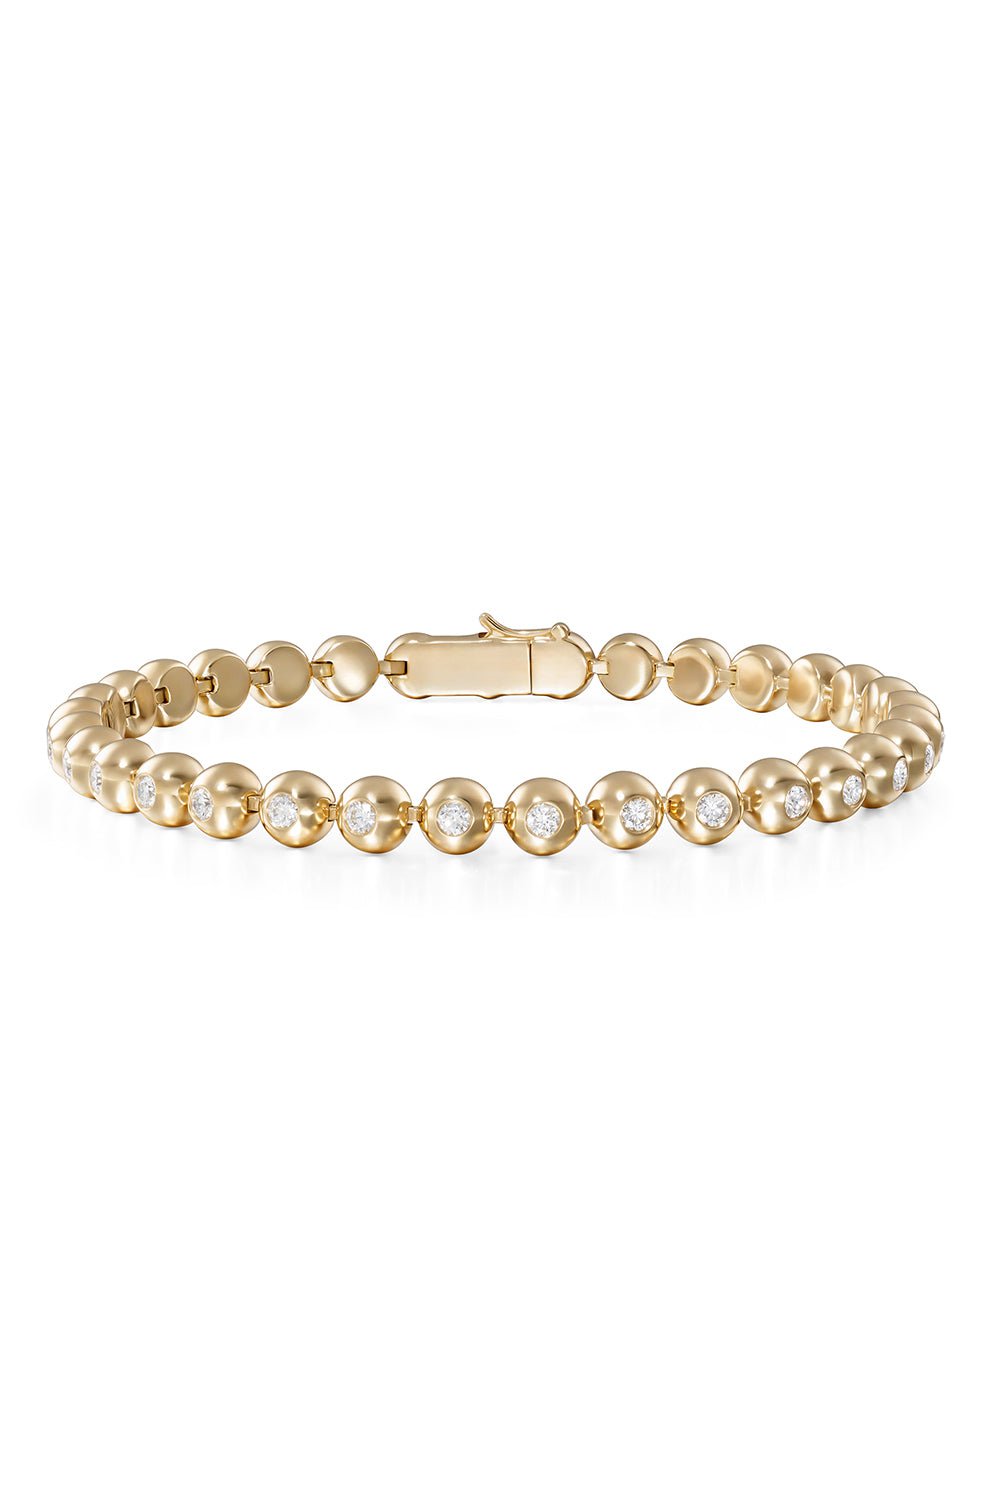 MELISSA KAYE-Small Audrey Tennis Bracelet-YELLOW GOLD